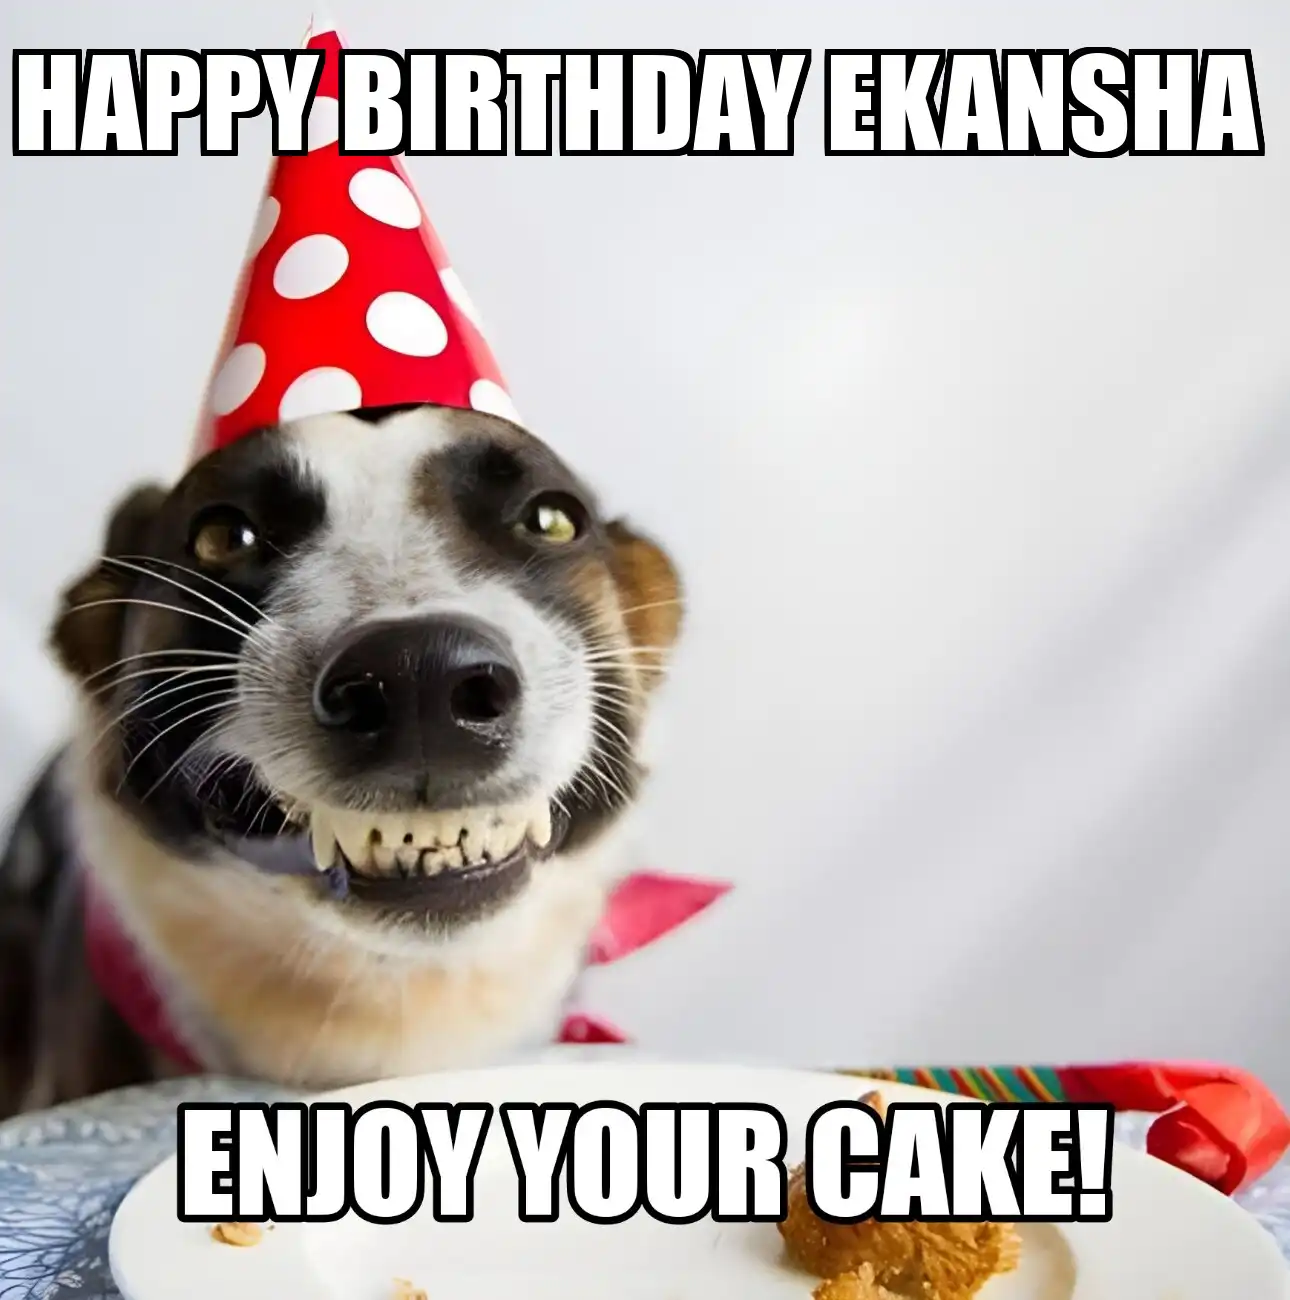 Happy Birthday Ekansha Enjoy Your Cake Dog Meme